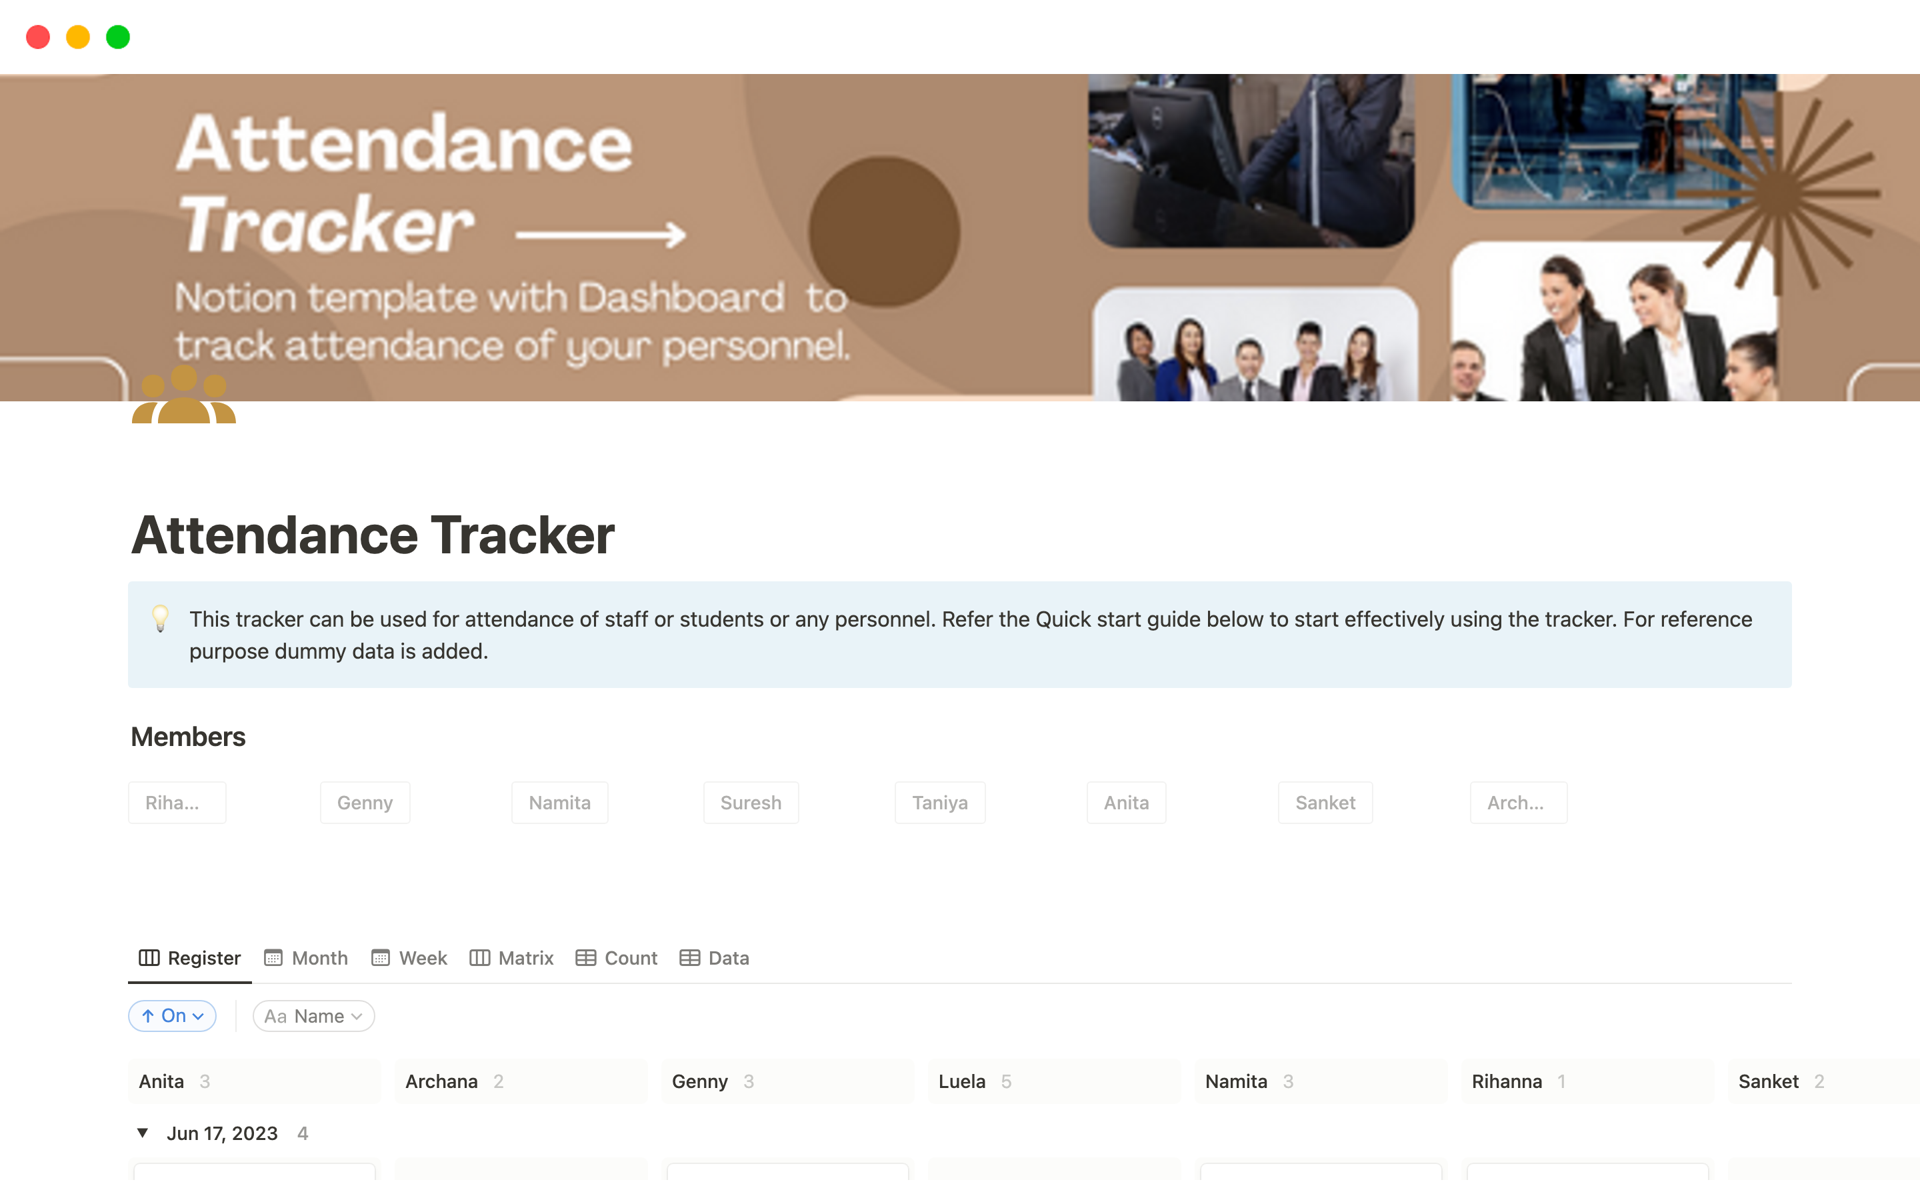 Vista previa de una plantilla para Attendance Tracker